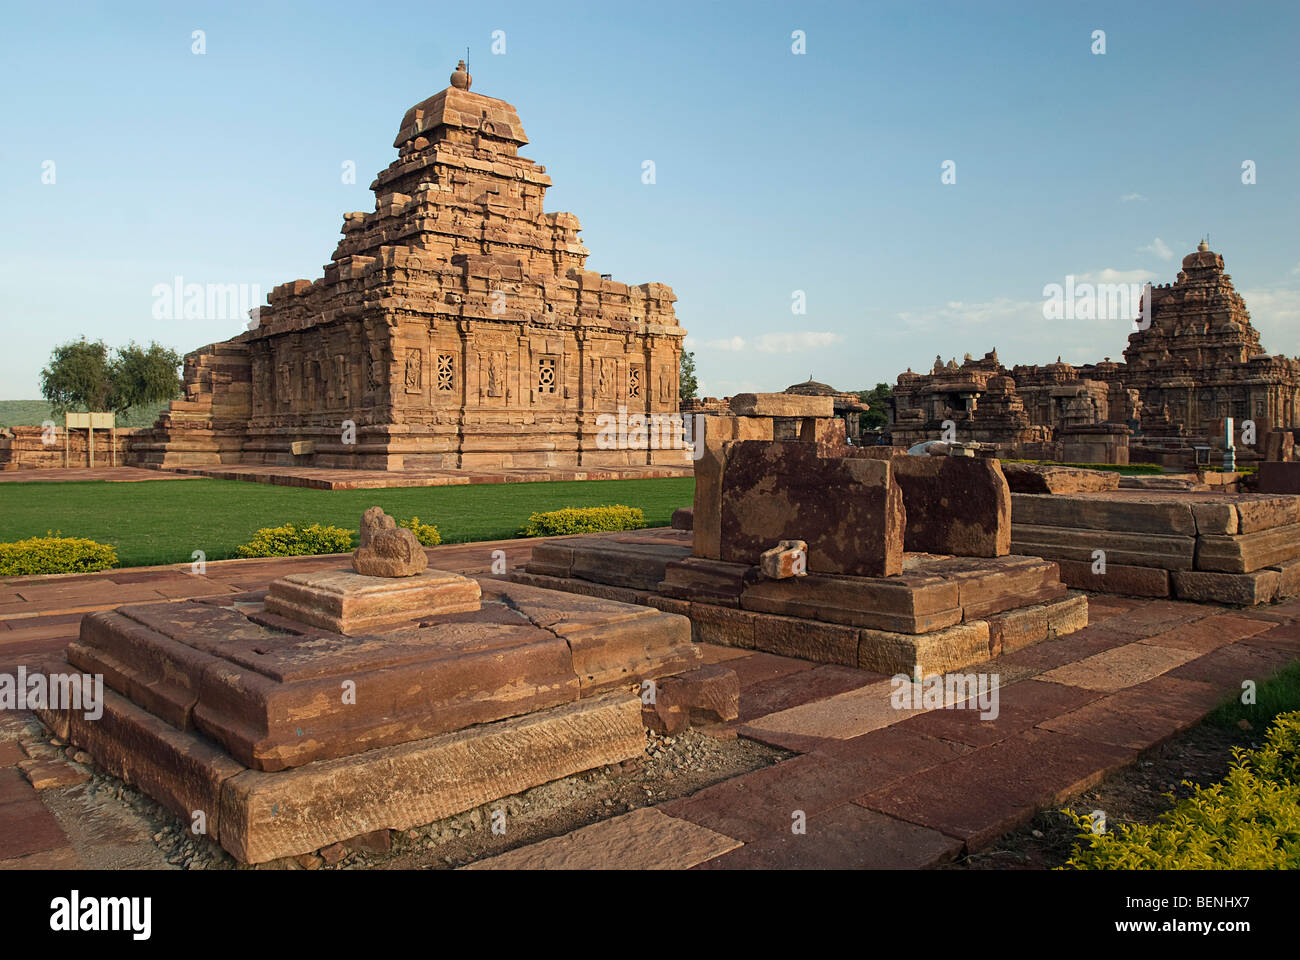 Sangameshwara Temple is the oldest temple in the group of the Pattadakkal temples built by King Vijayaditya Satyashraya around Stock Photo